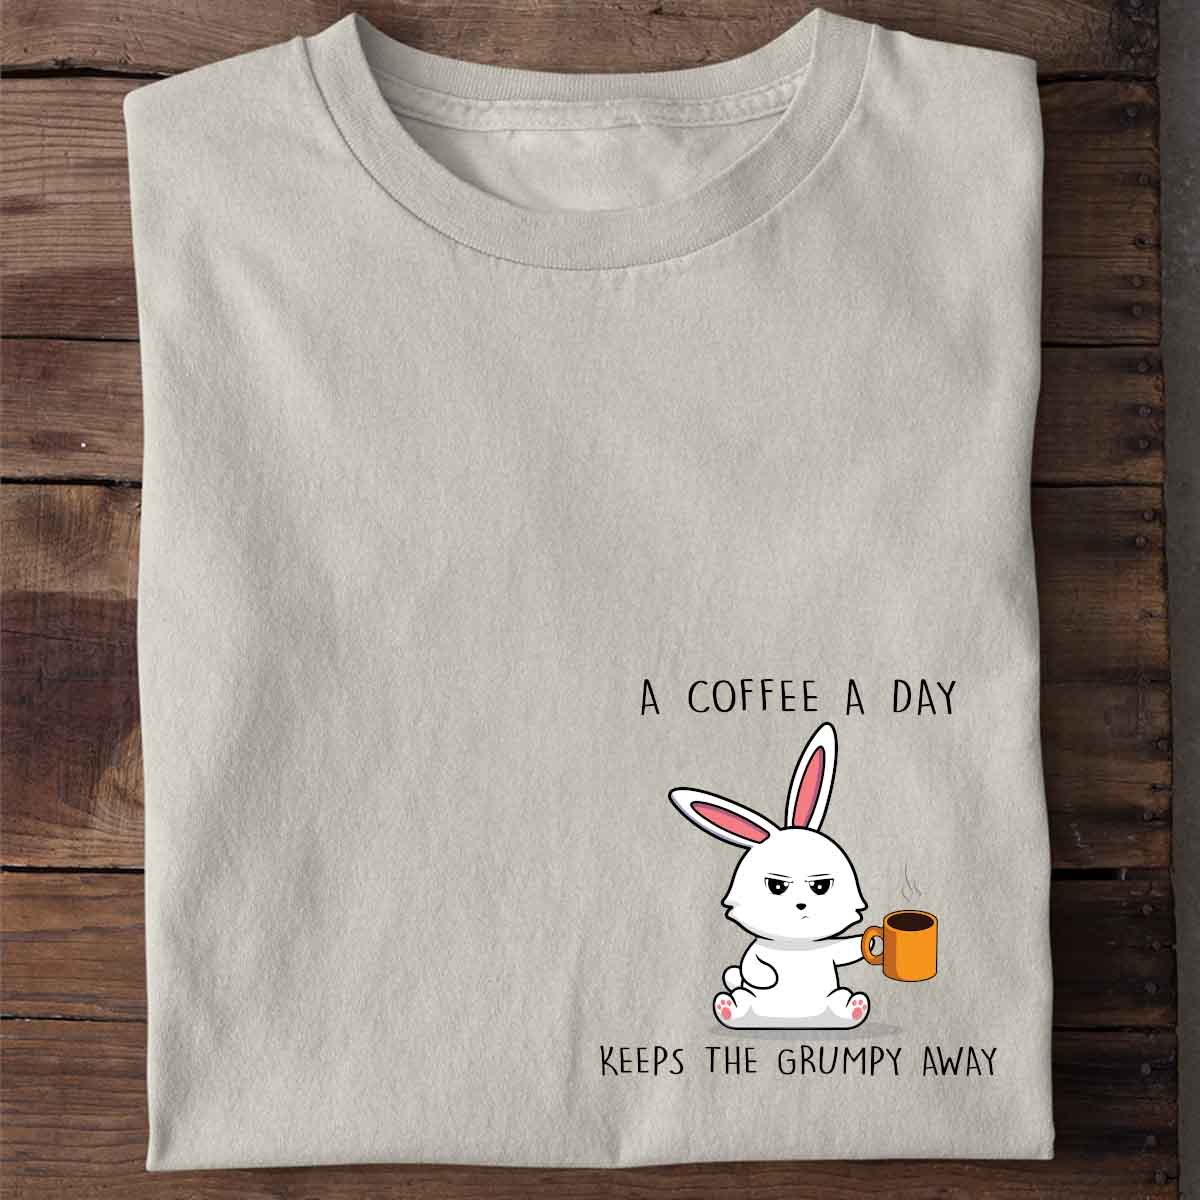 Grumpy Cute Bunny - Shirt Unisex Chest